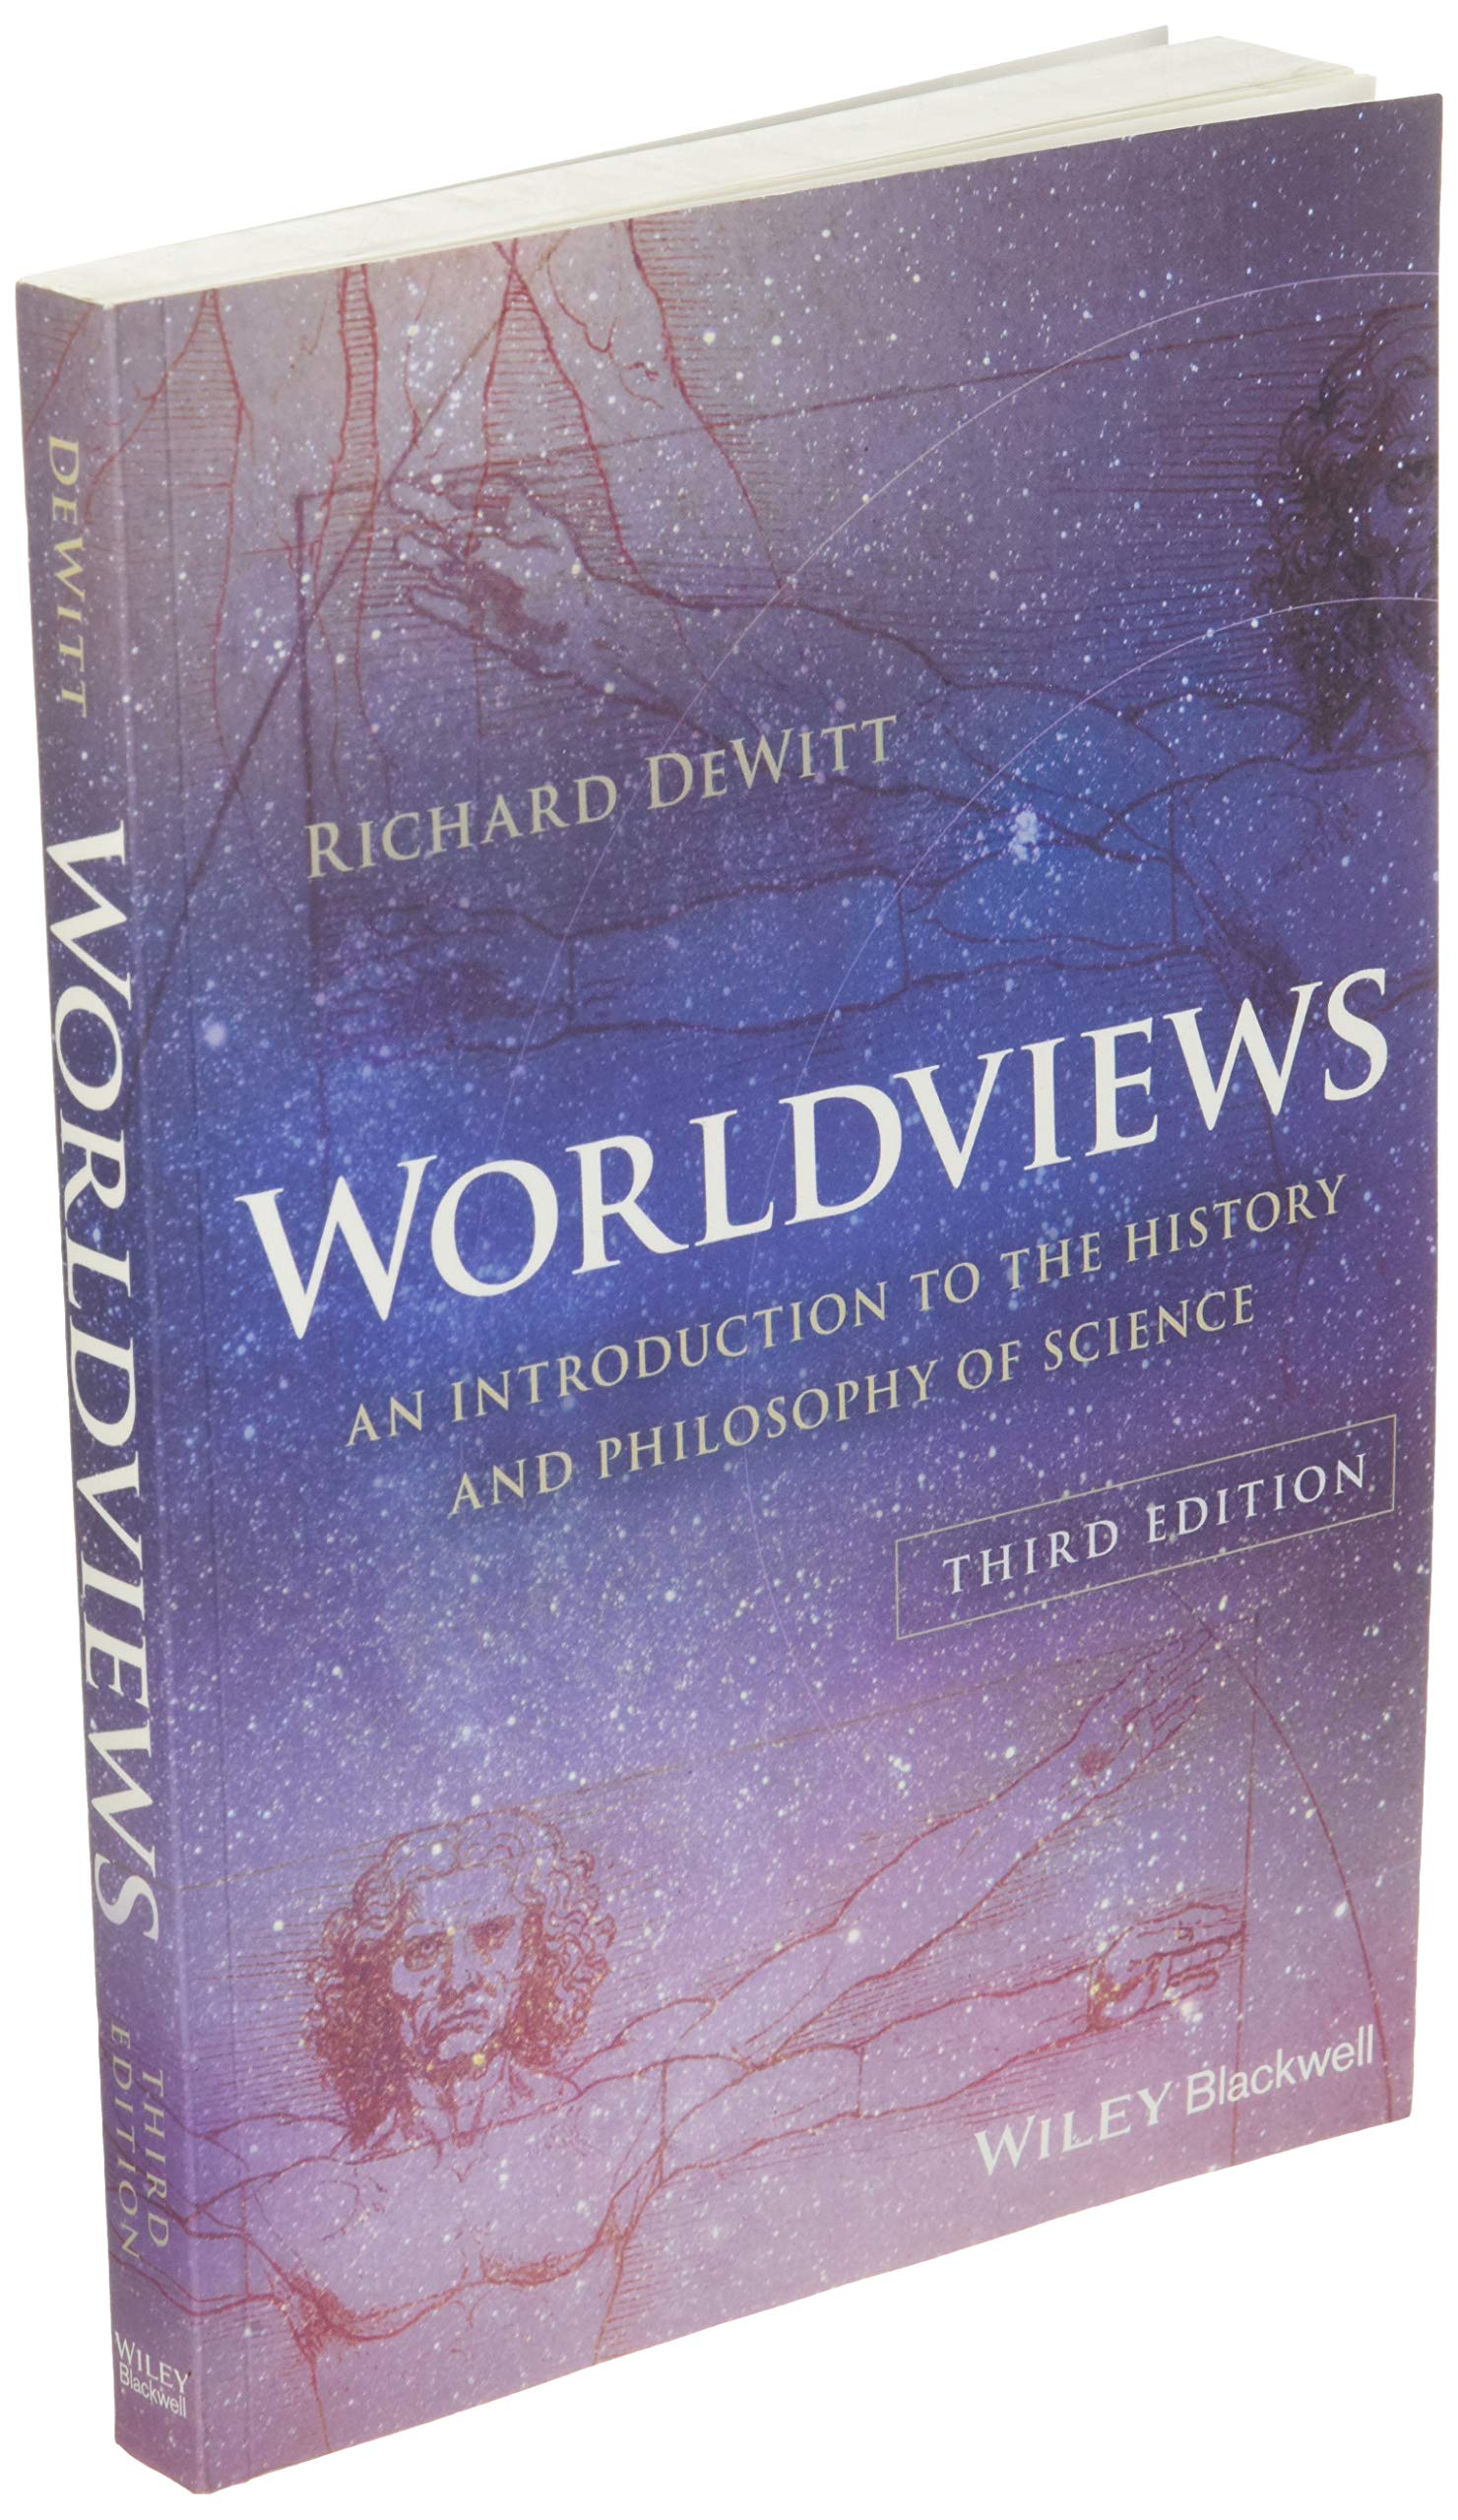 Mua Worldviews: An Introduction to the History and Philosophy of Science trên Amazon Mỹ chính hãng 2023 | Fado